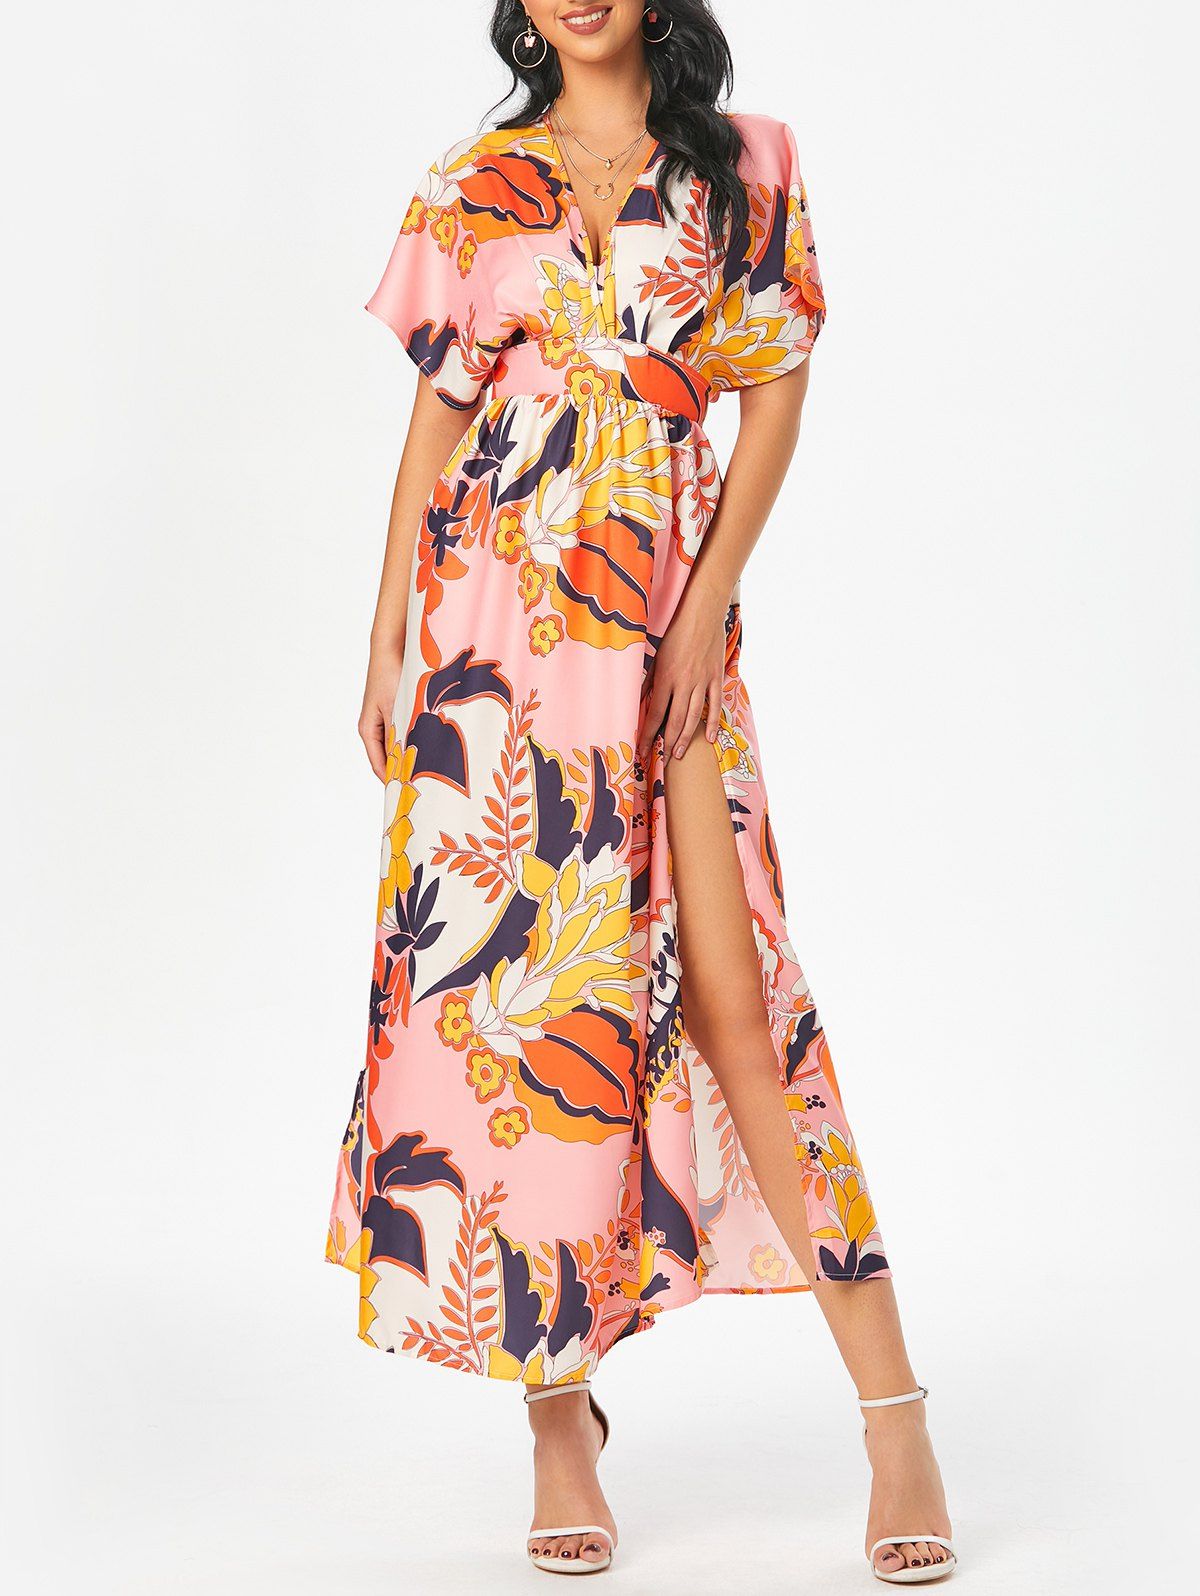 Floral Print Batwing Sleeve Slit Maxi Dress - multicolor S